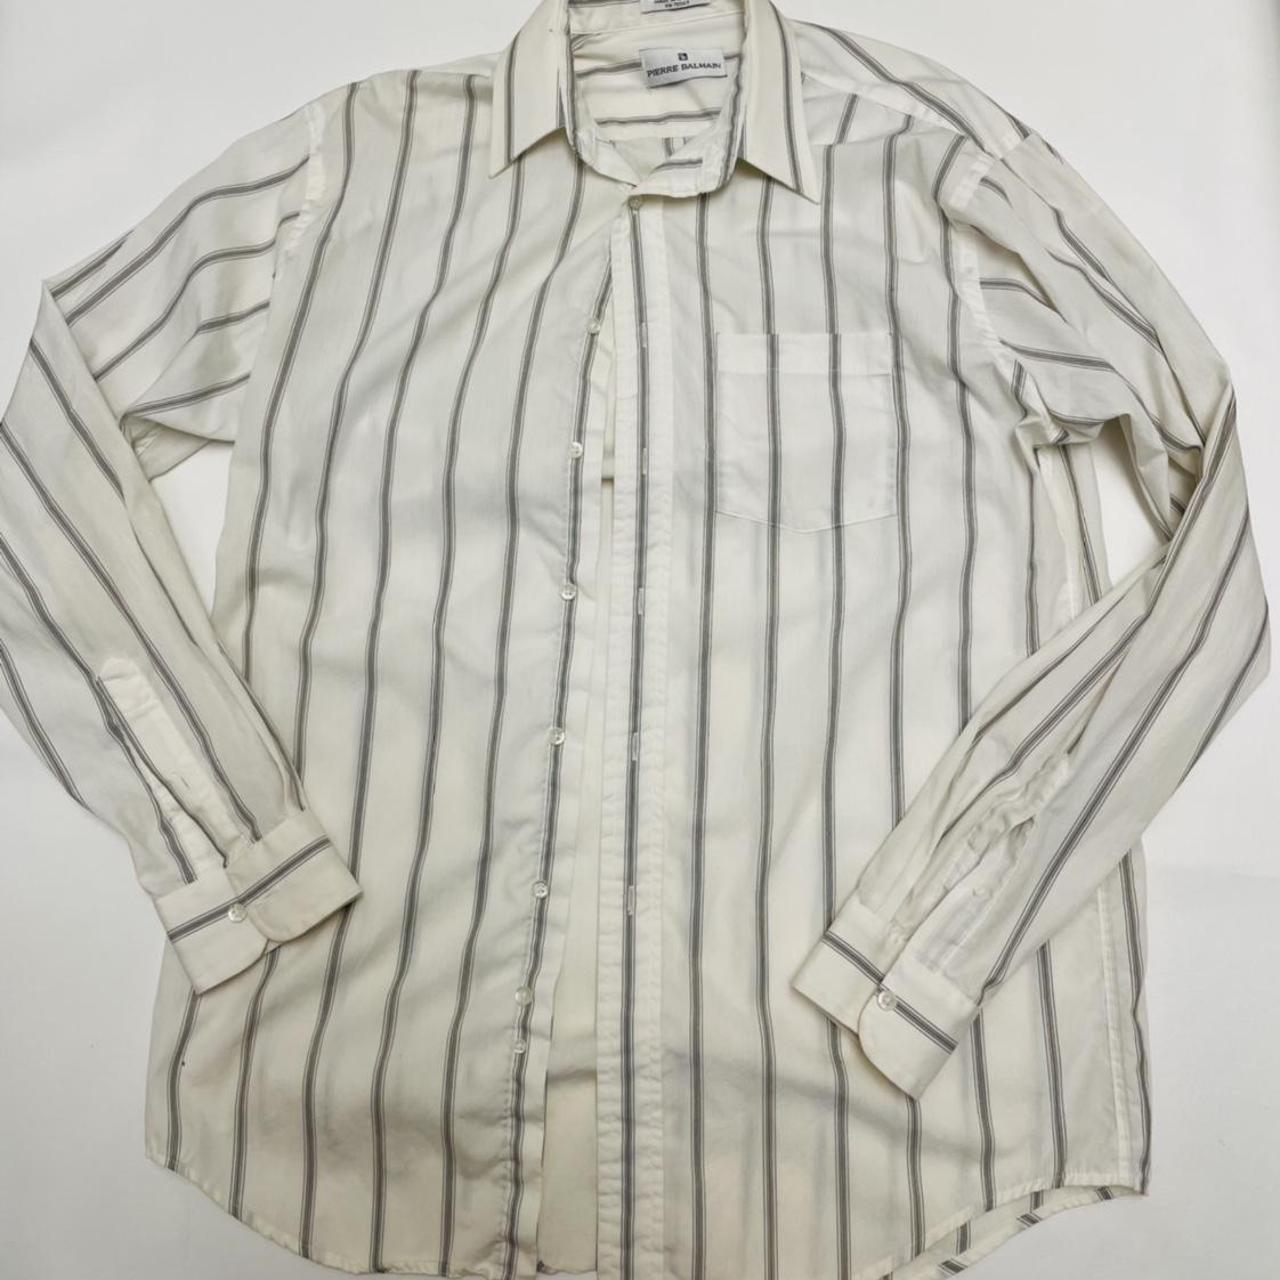 Vintage PIERRE BALMAIN Dress Shirt. Good Condition!... - Depop